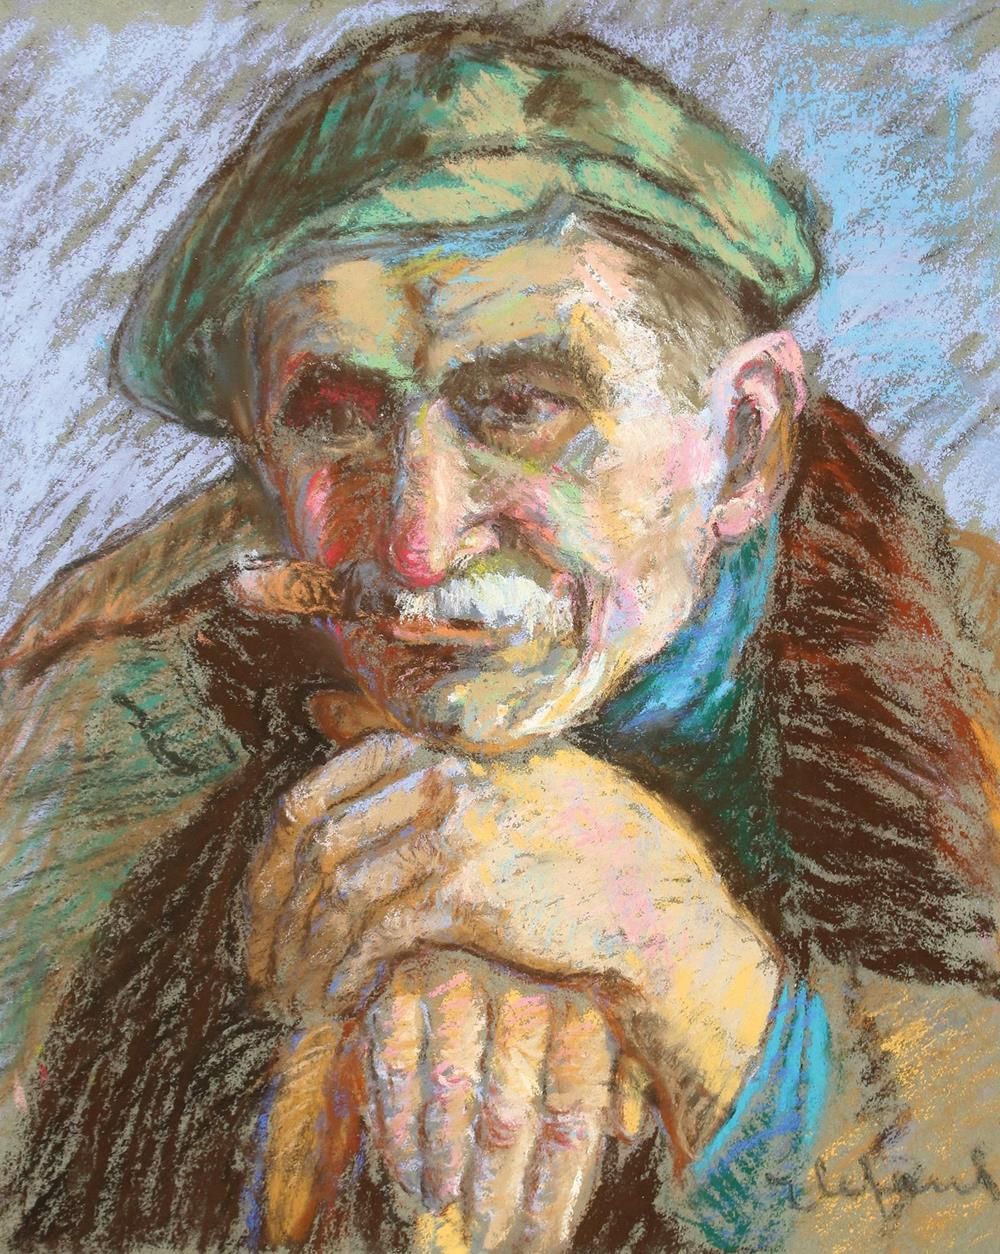 Elefánt, Jeno (1899/1897大概是Großwadein - Mauthausen 1944/45) 。一个留着小胡子、抽着雪茄的老人的画像。&hellip;